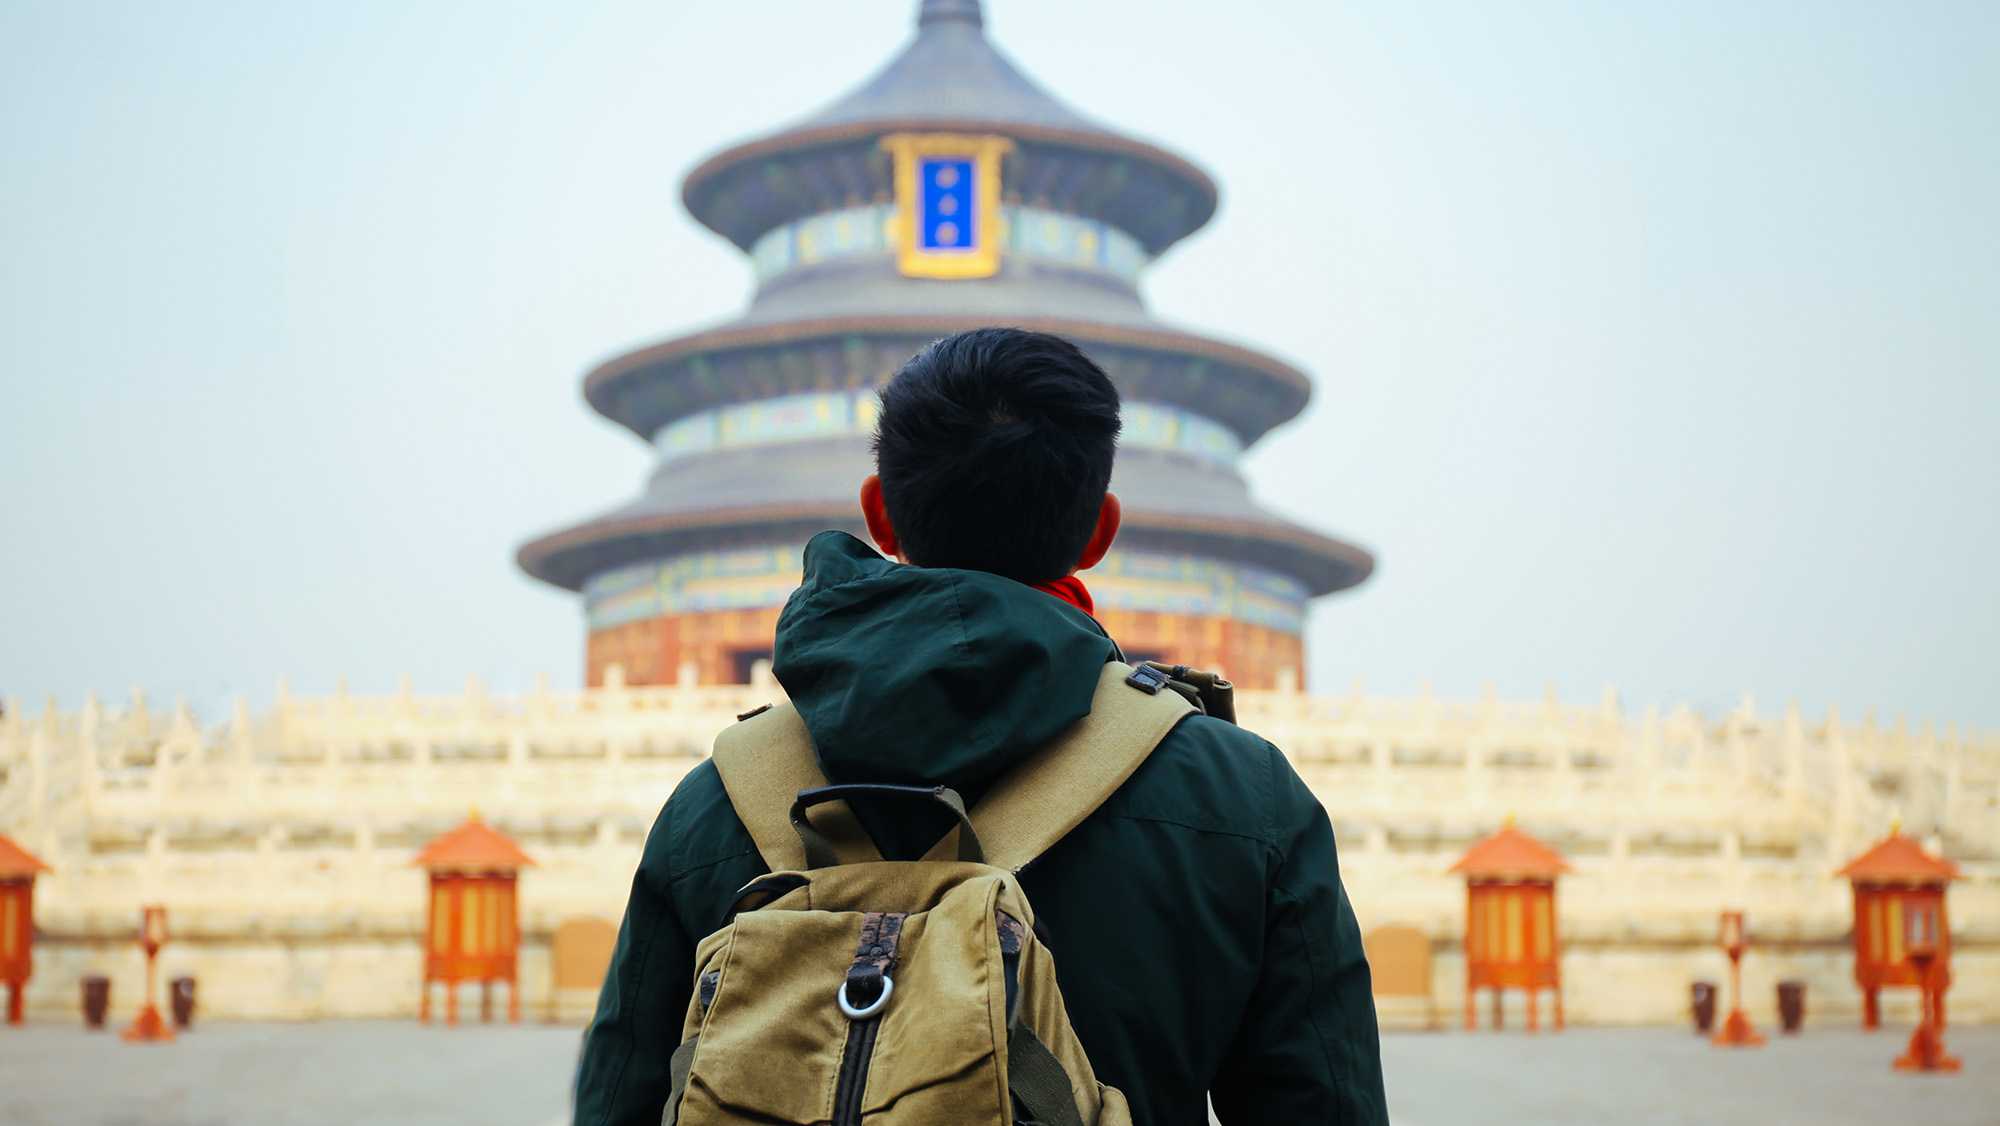 tourism china benefits